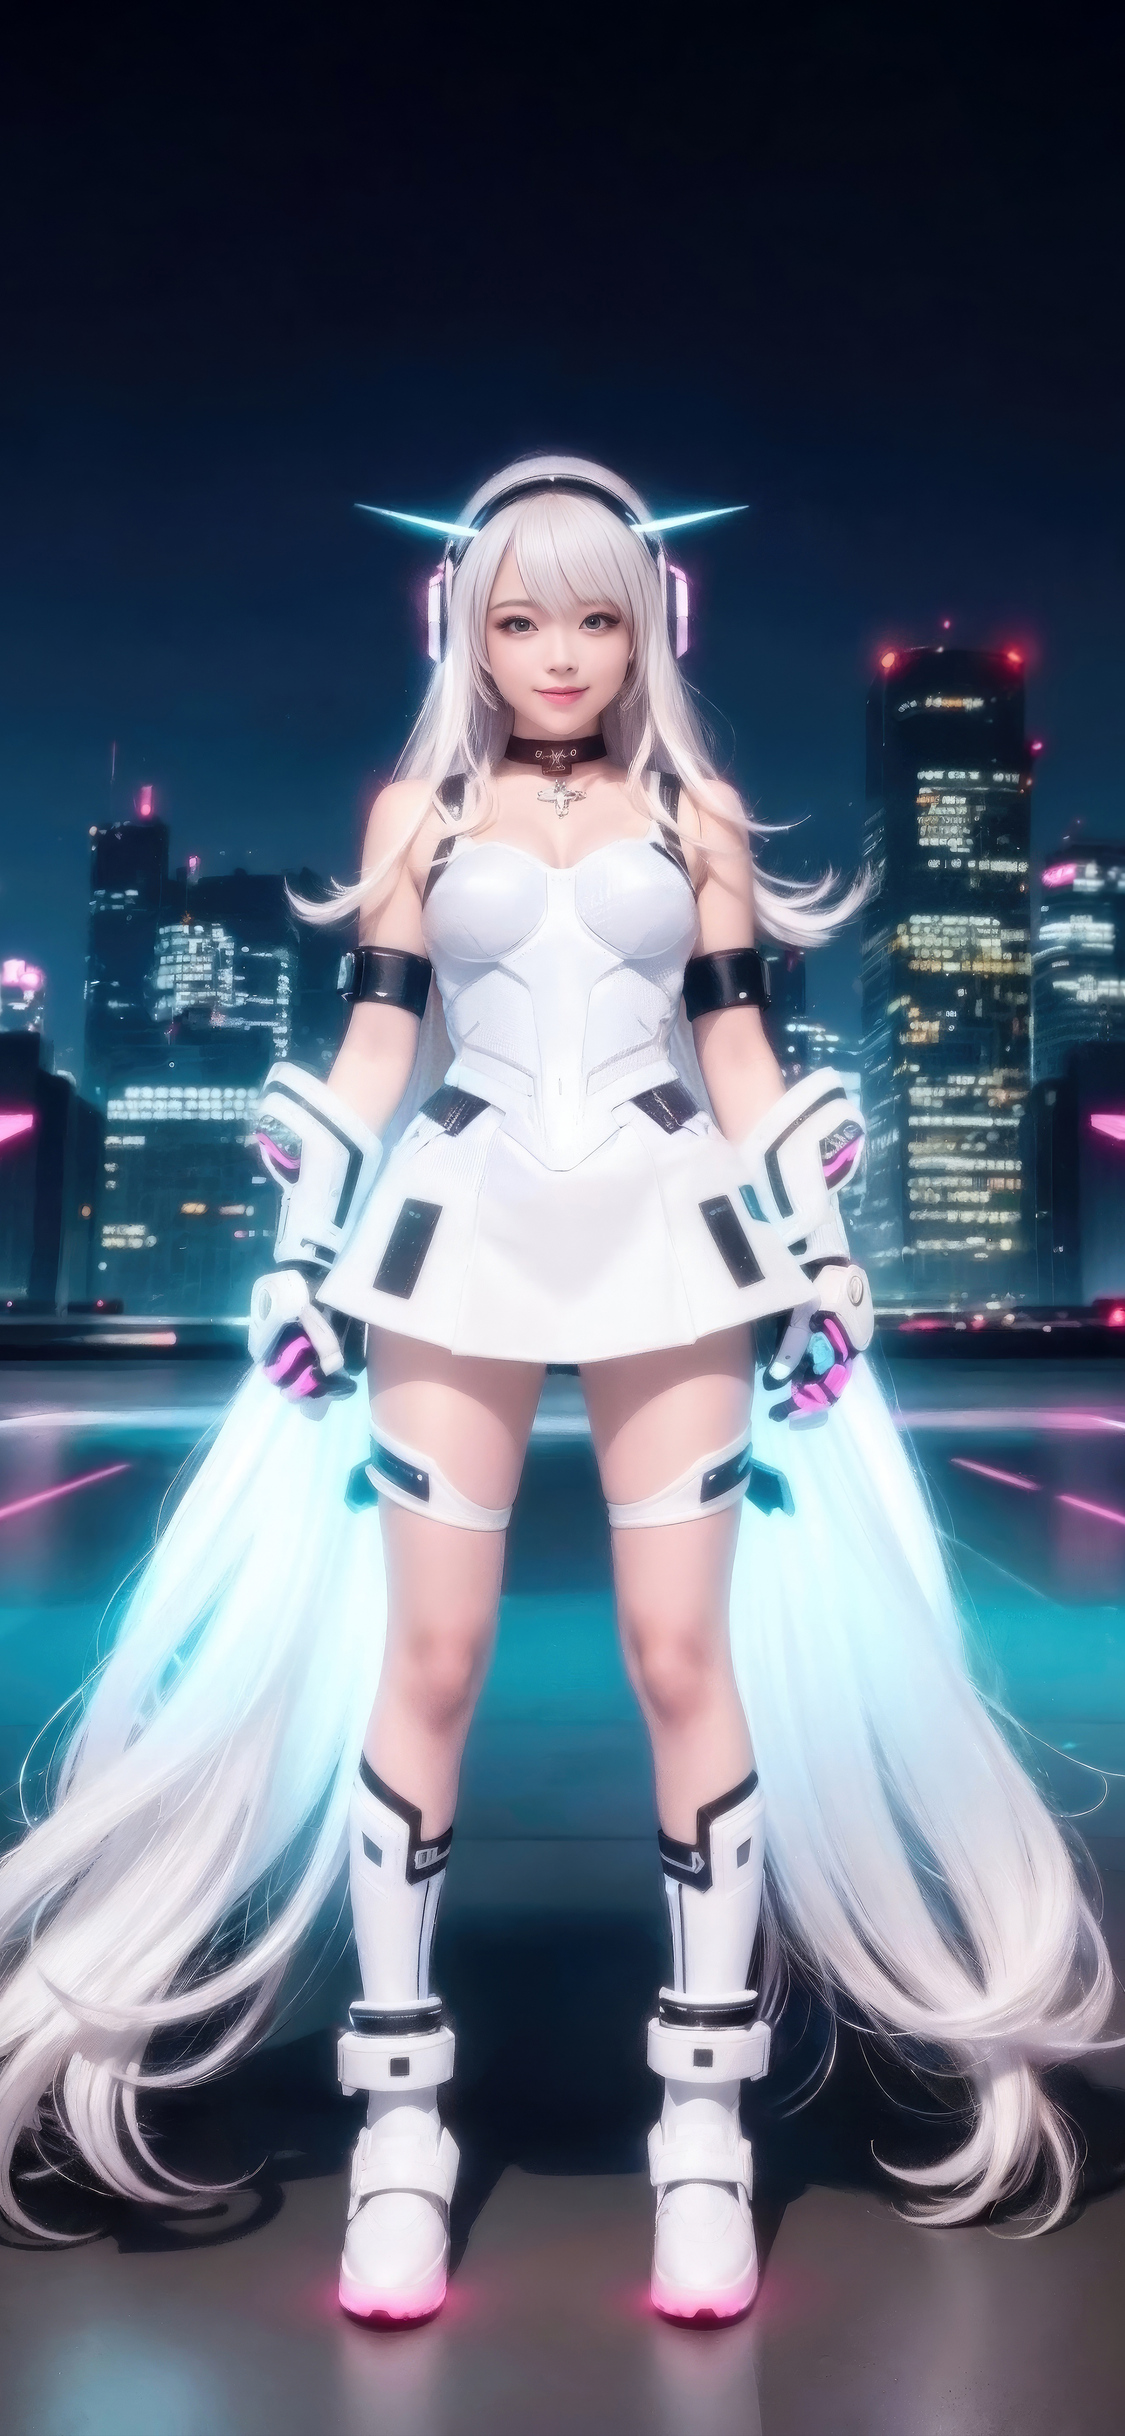 asian-cyber-girl-city-lights-armor-character-l5.jpg